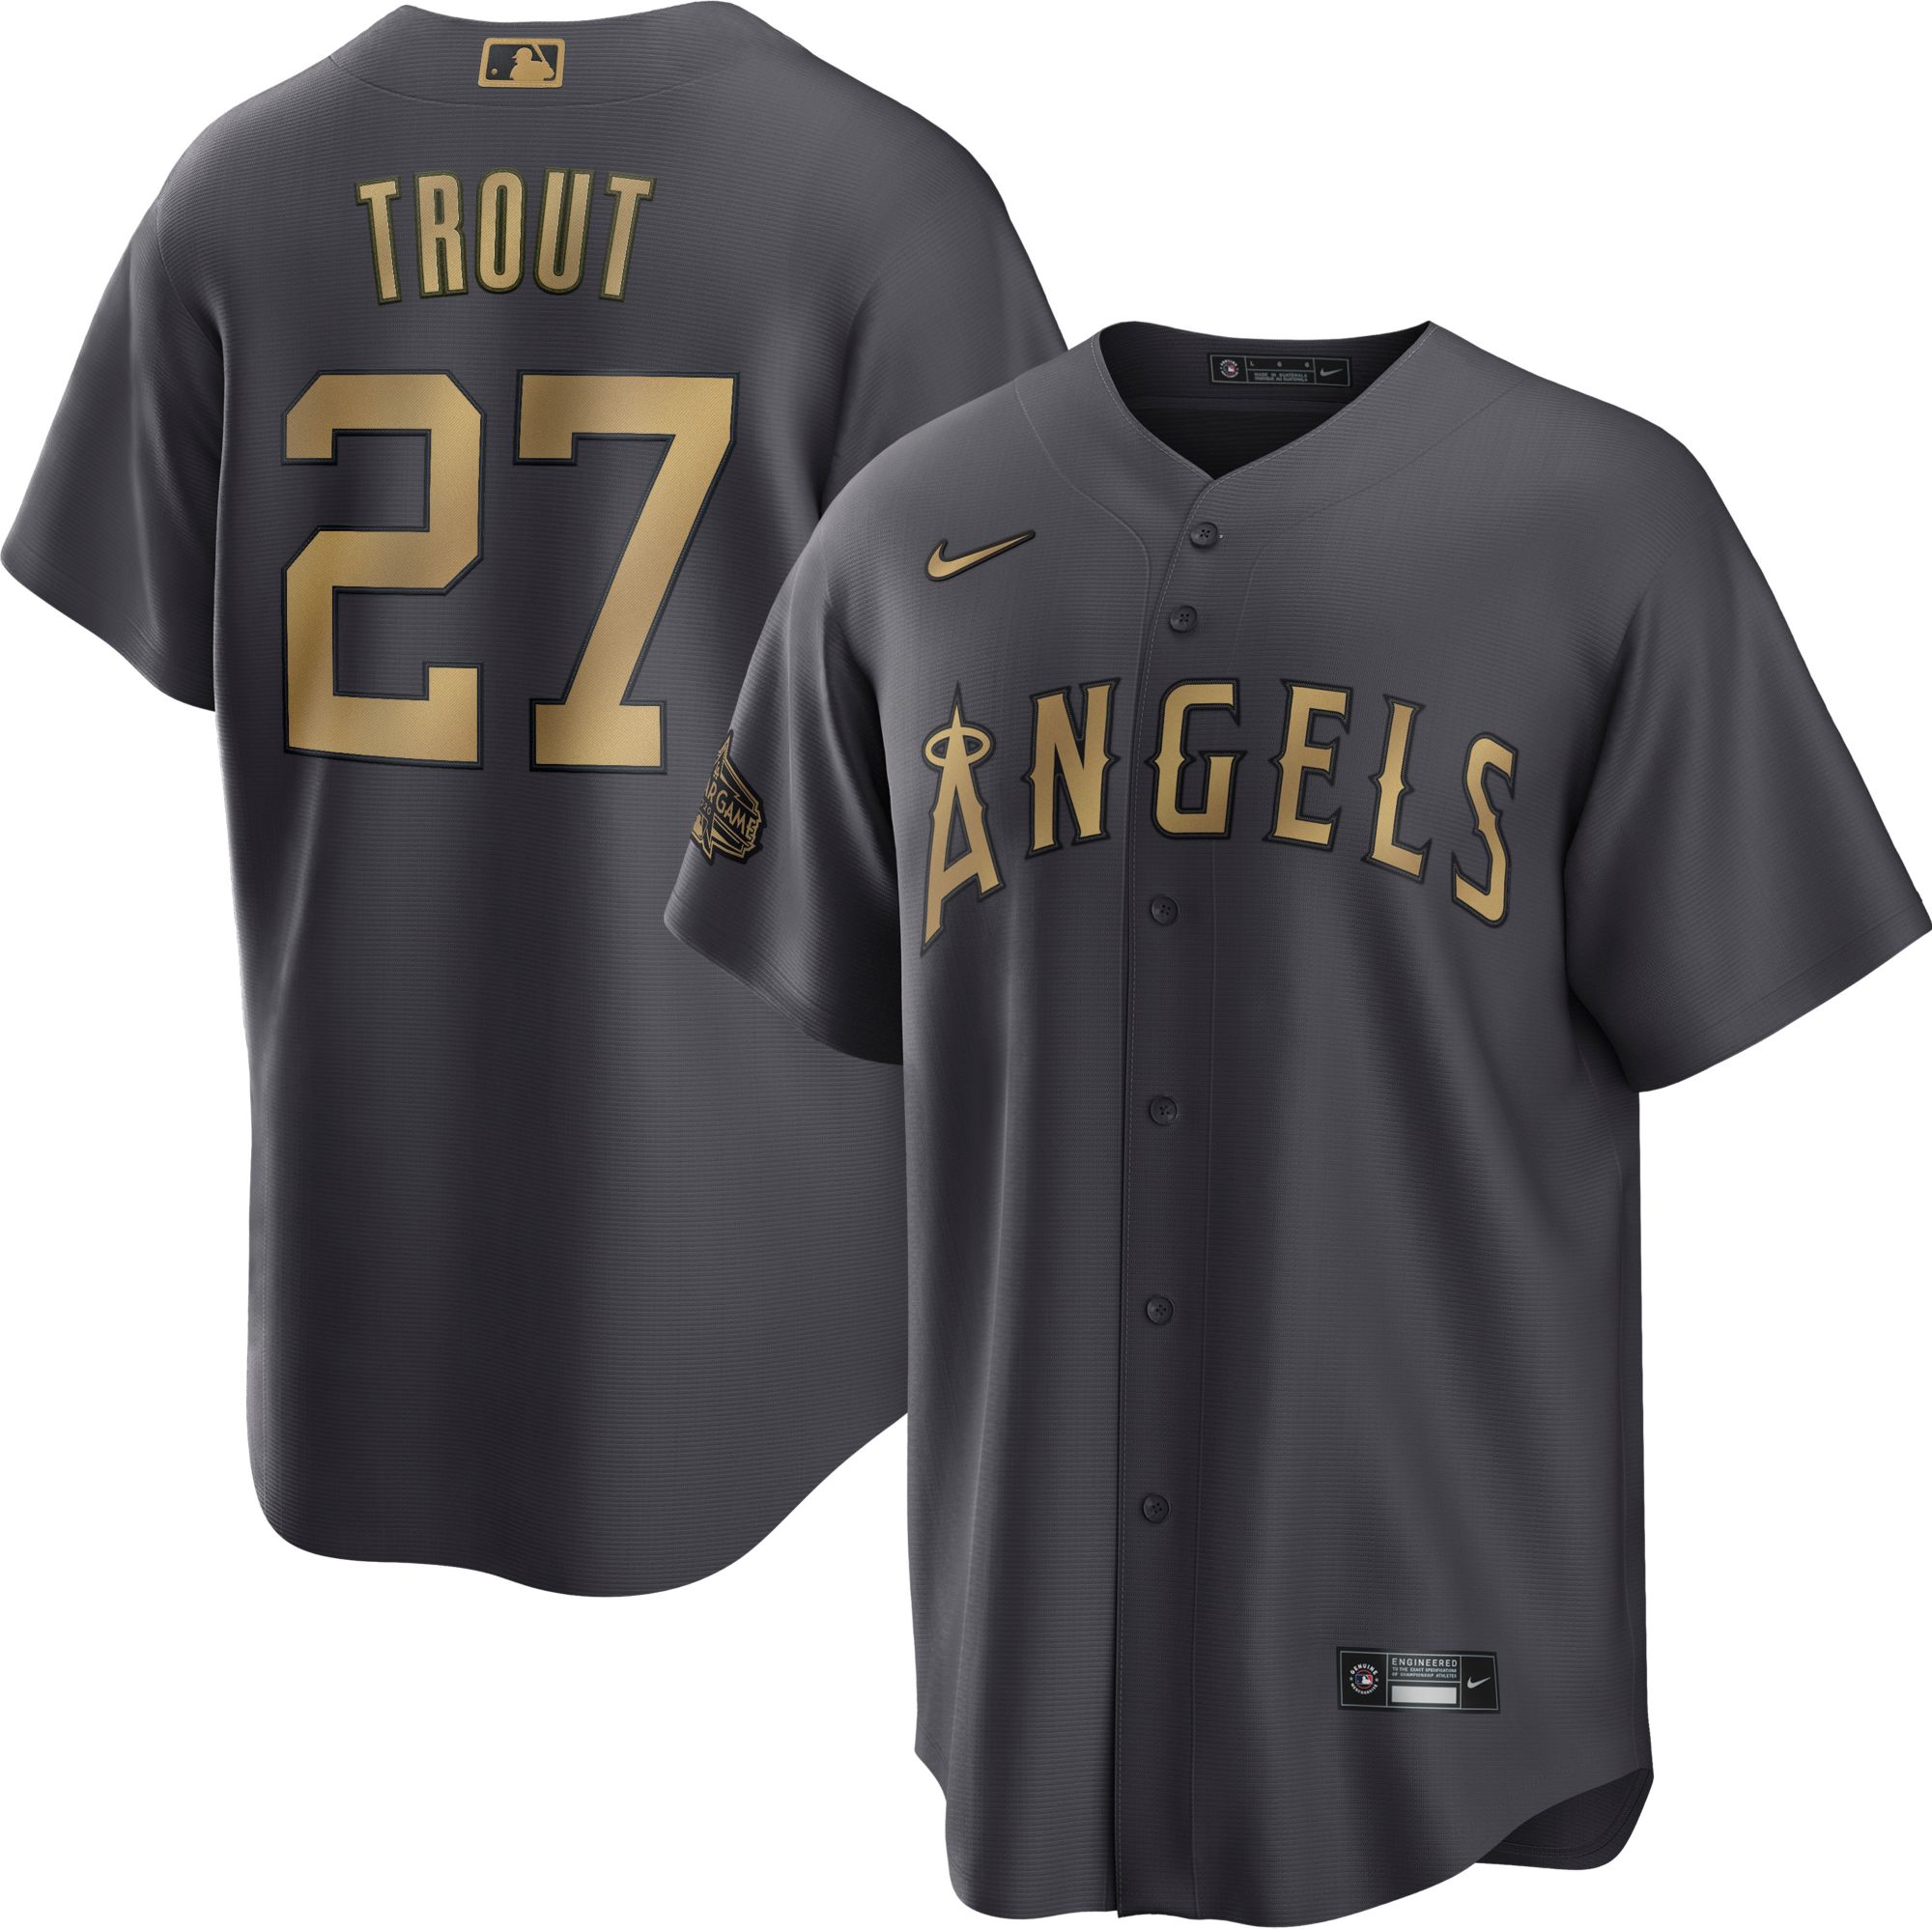 Lot - MLB Los Angeles Angels Nike #27 Trout Jersey - Mens XXL